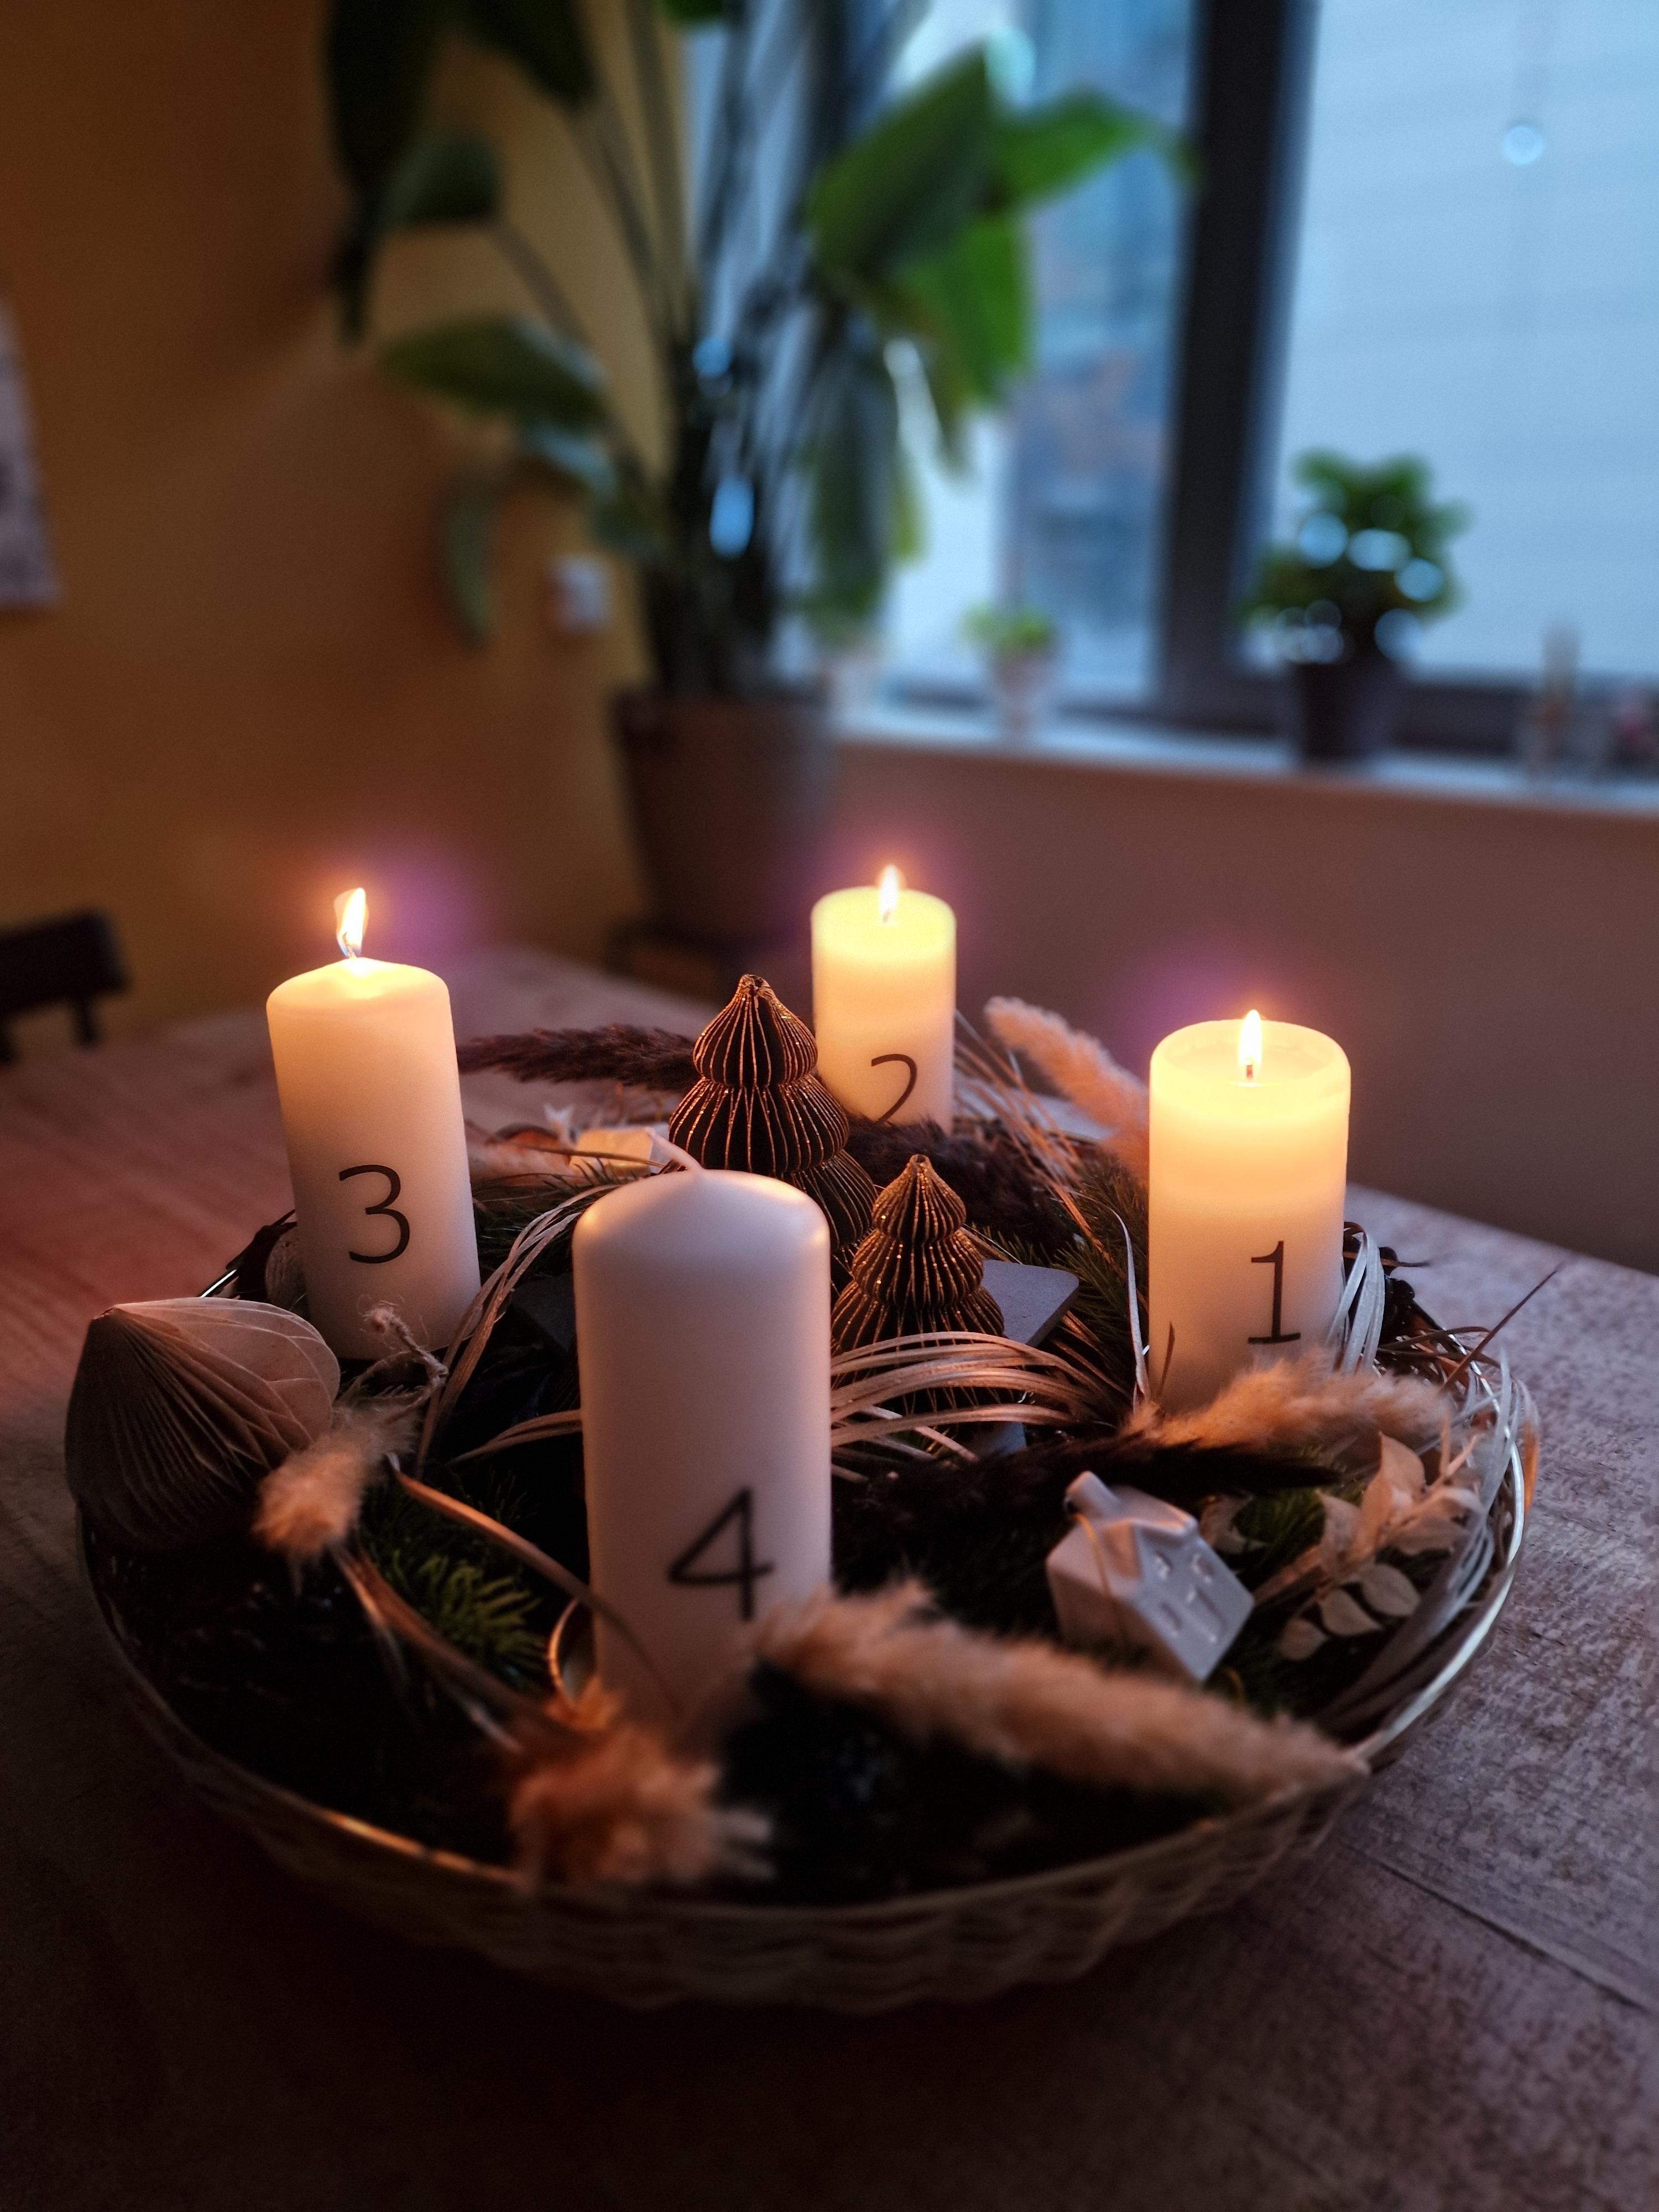 Fast schon Weihnachten. 🎄

#adventskranz #Kerzen #Kranz #Häuschen #Tannenbaum #papierhänger #pampasgras #bohokranz